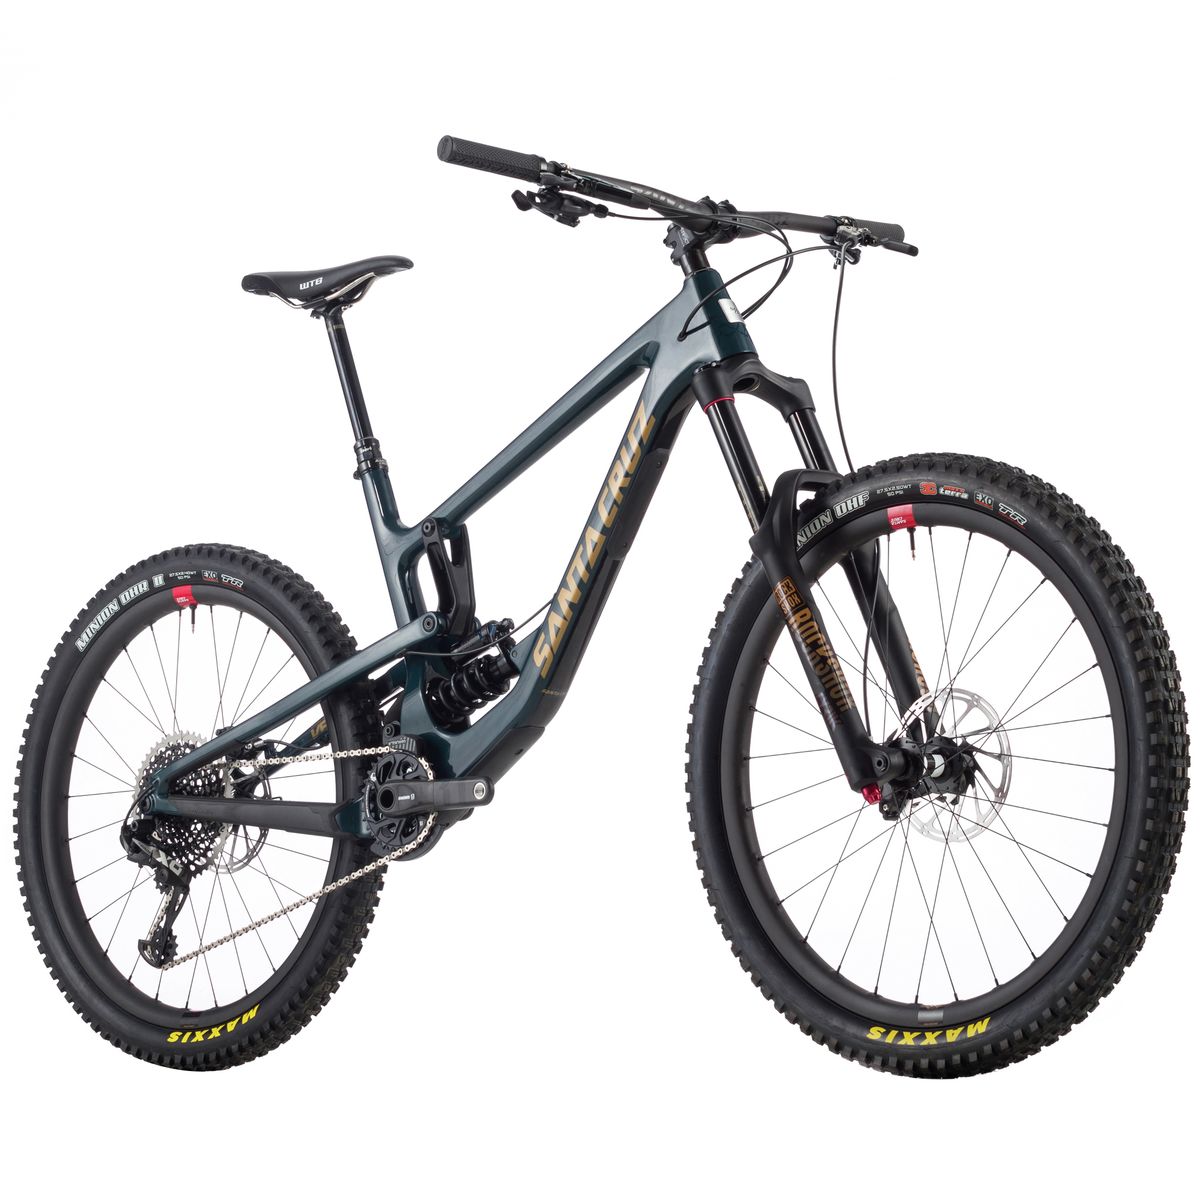 Santa Cruz Bicycles Nomad Carbon CC X01 Reserve RCT Coil Complete Mountain Bike 2018